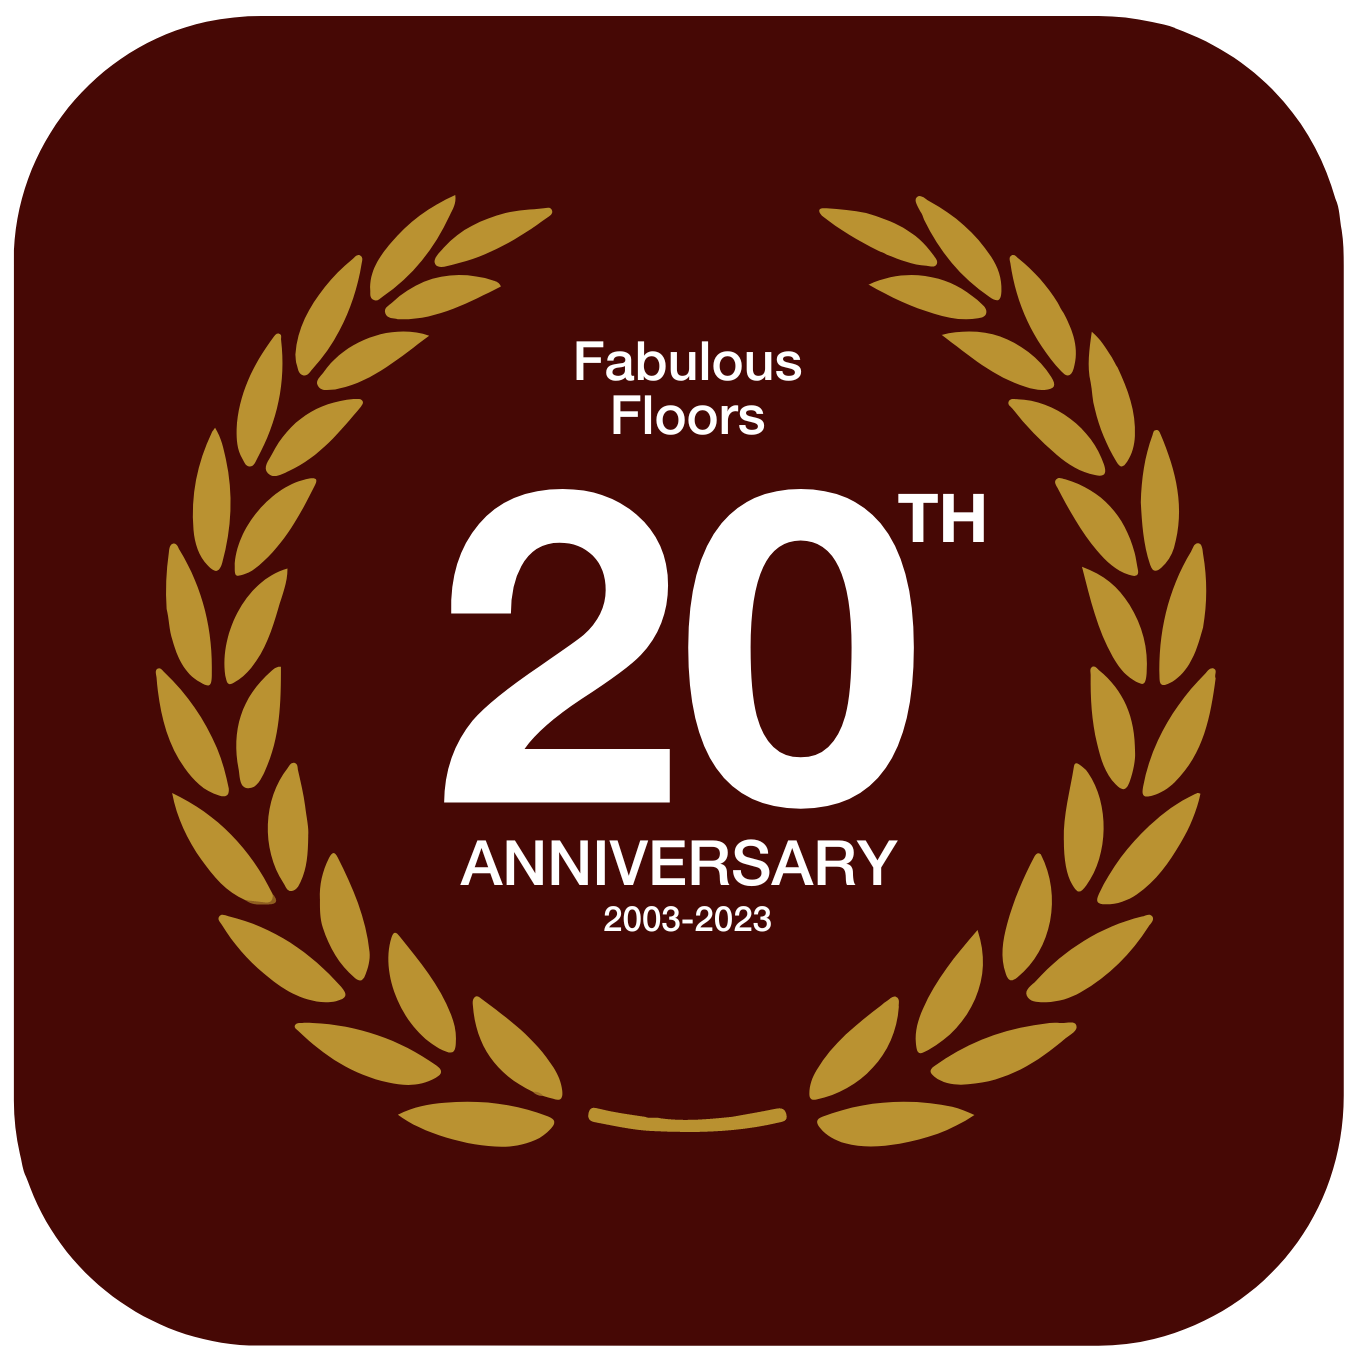 Fabulous Floors 20th anniversary